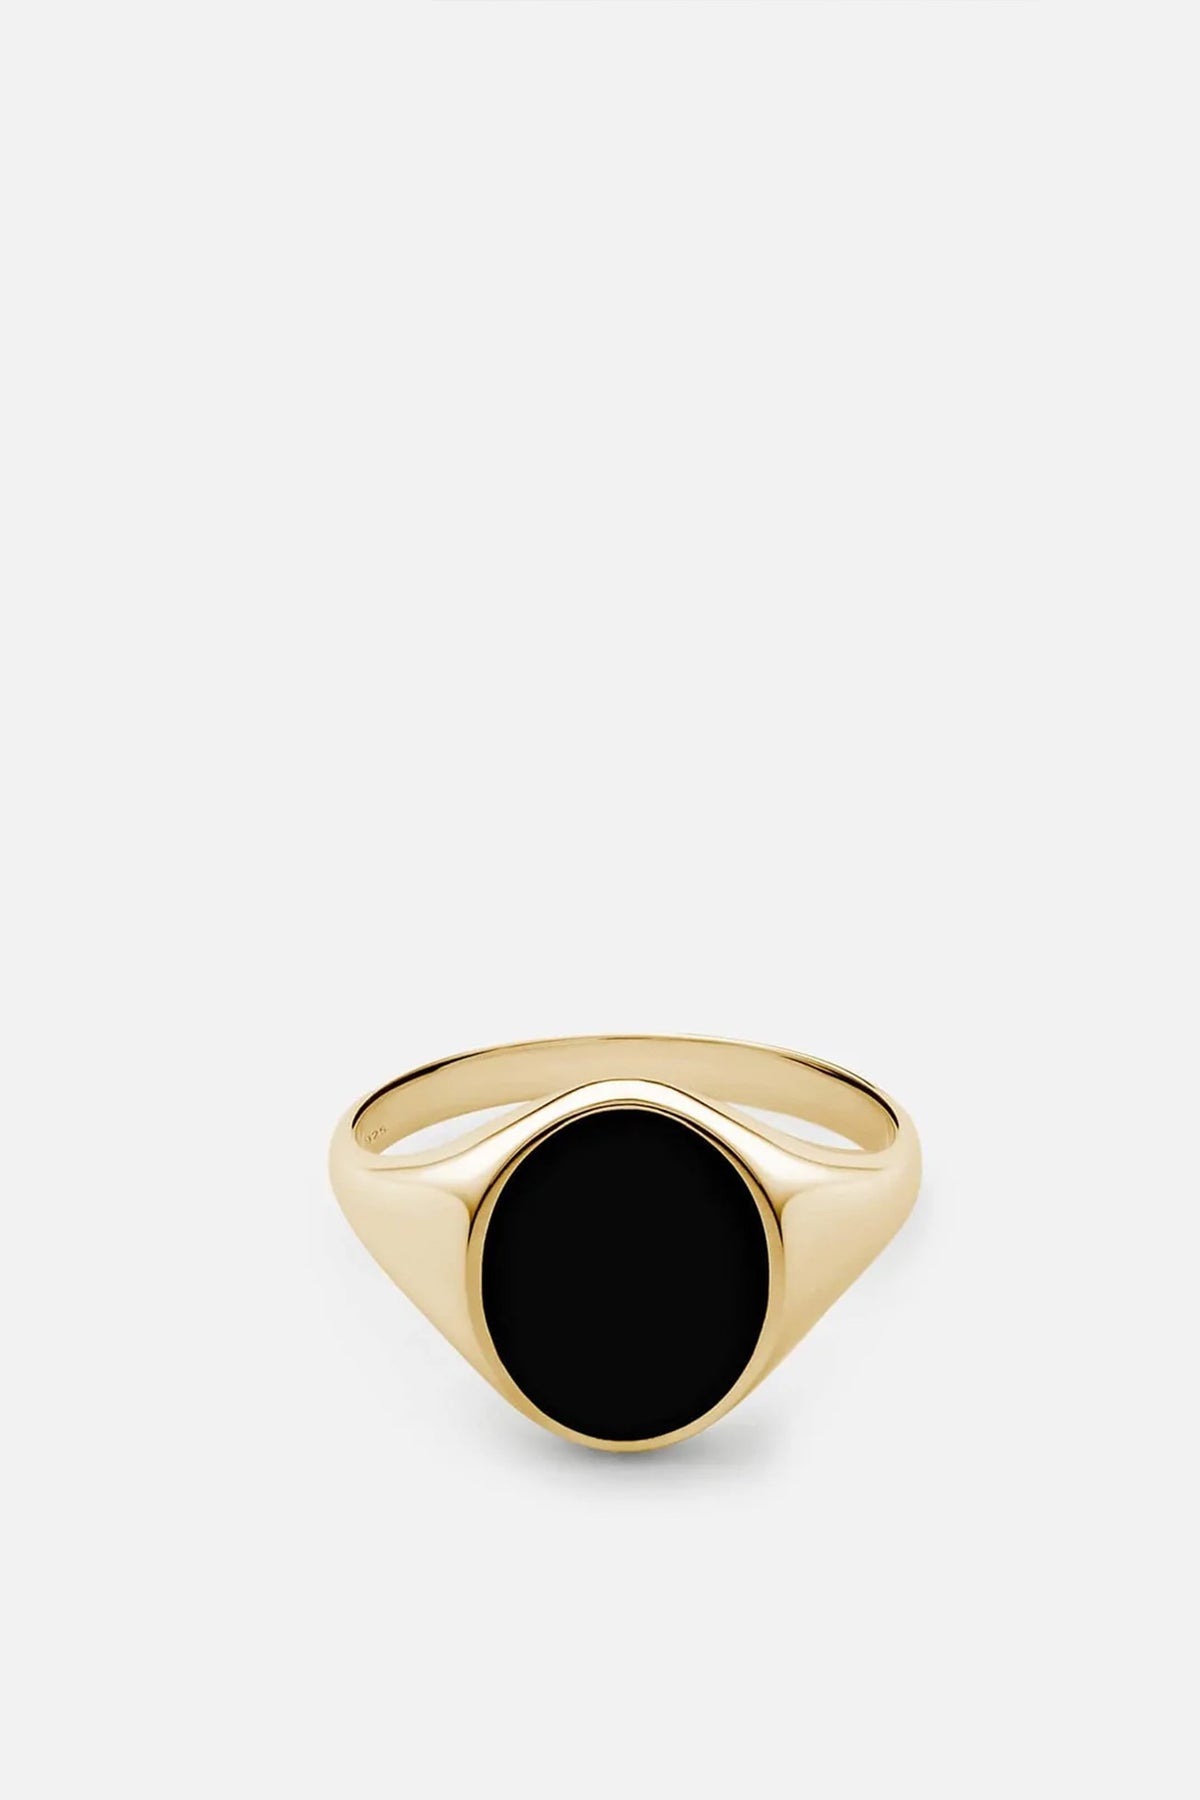 Miansai Heritage Ring Gold Vermeil/Black